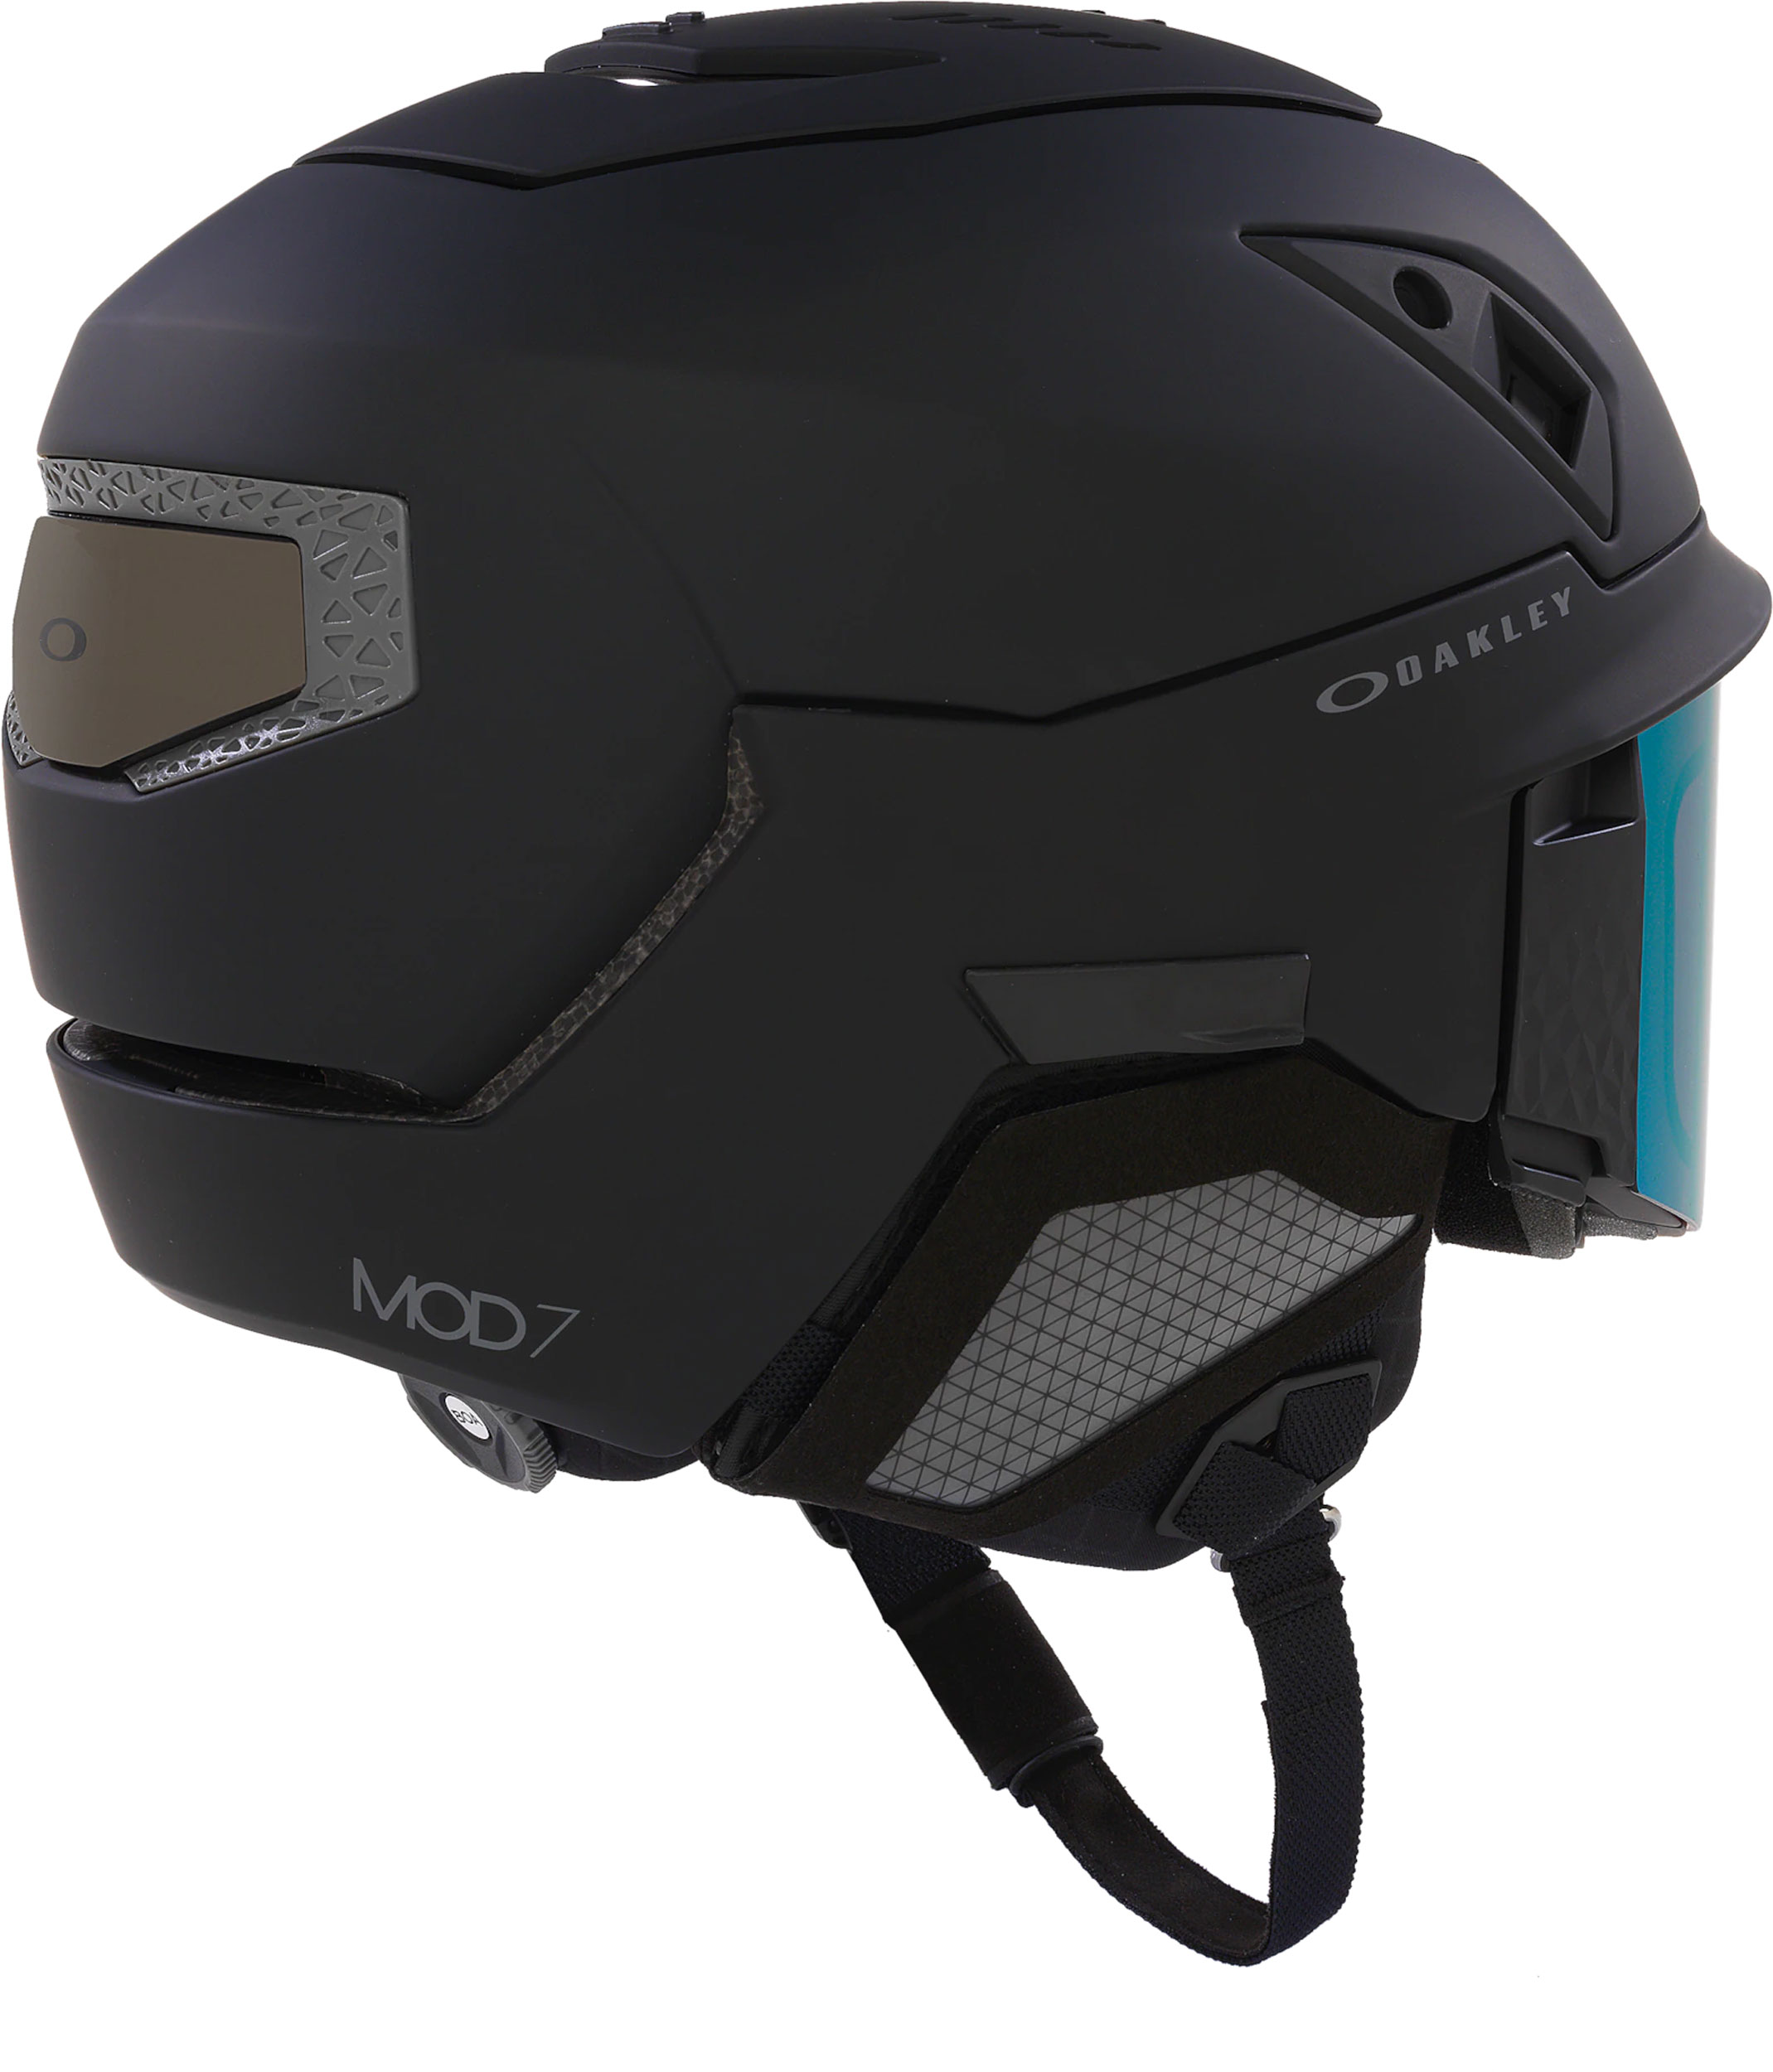 Oakley Mod 7 Helmet | Mount Everest